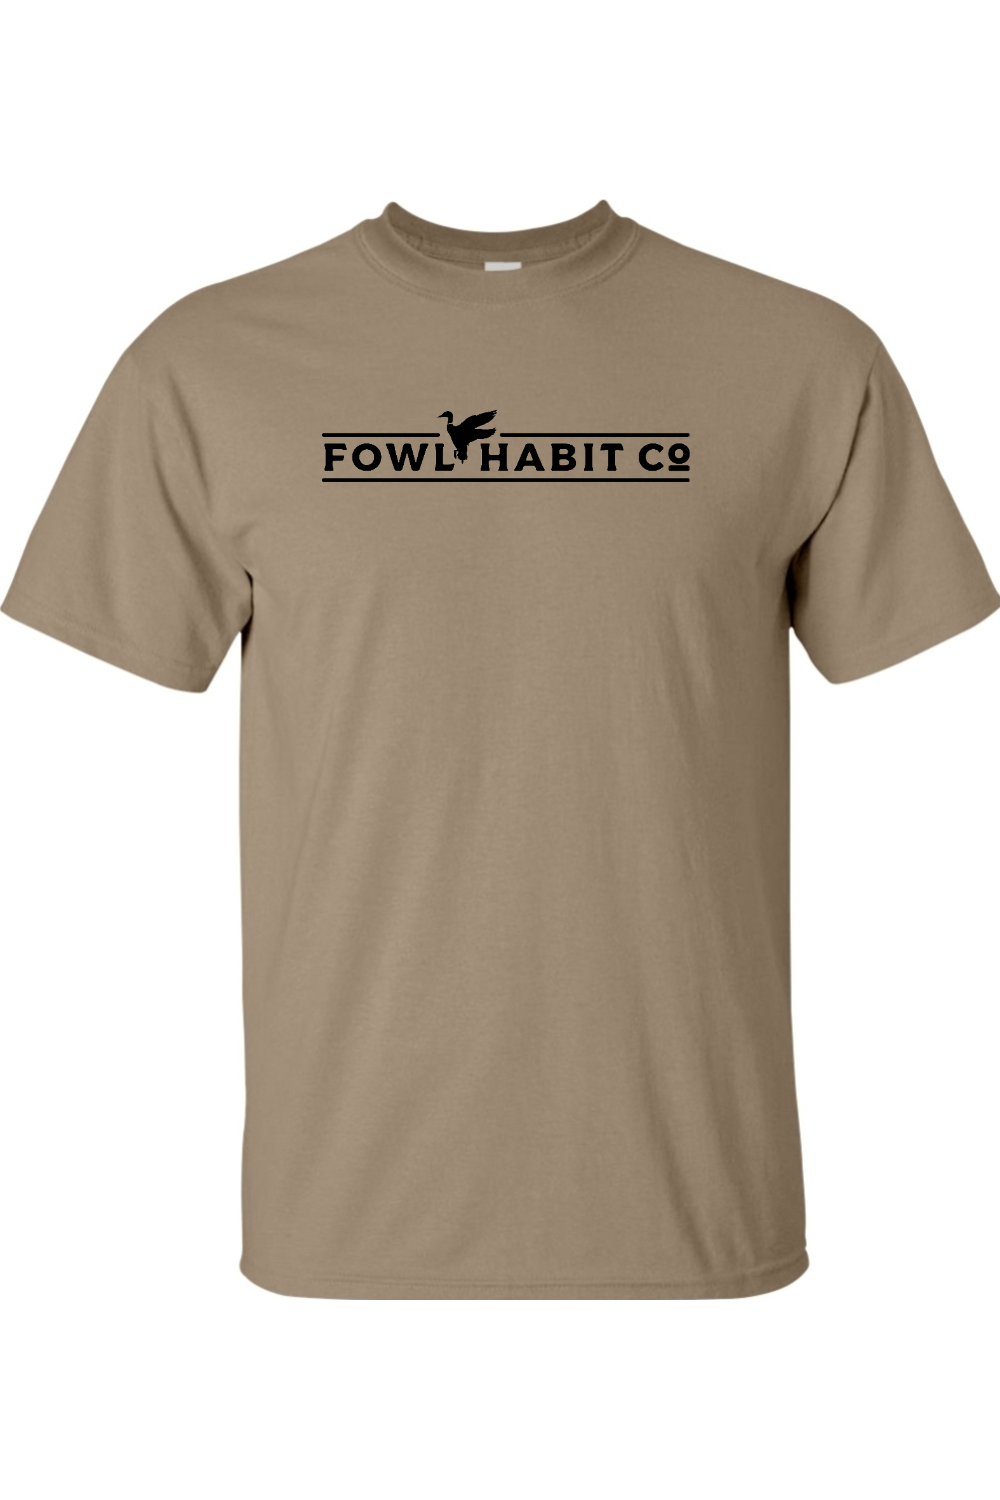 The Brand T-Shirt - Fowl Habit Co.